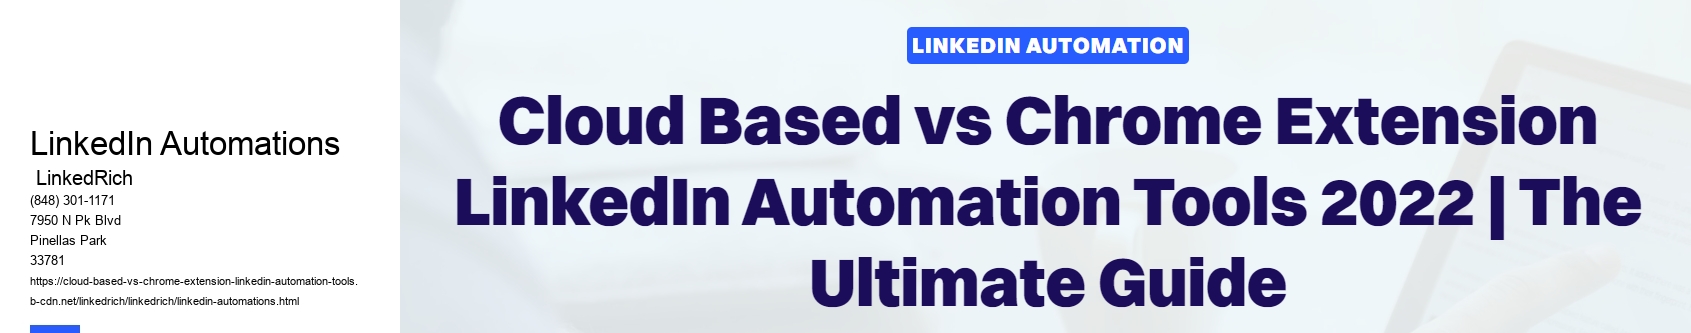 LinkedIn Automations